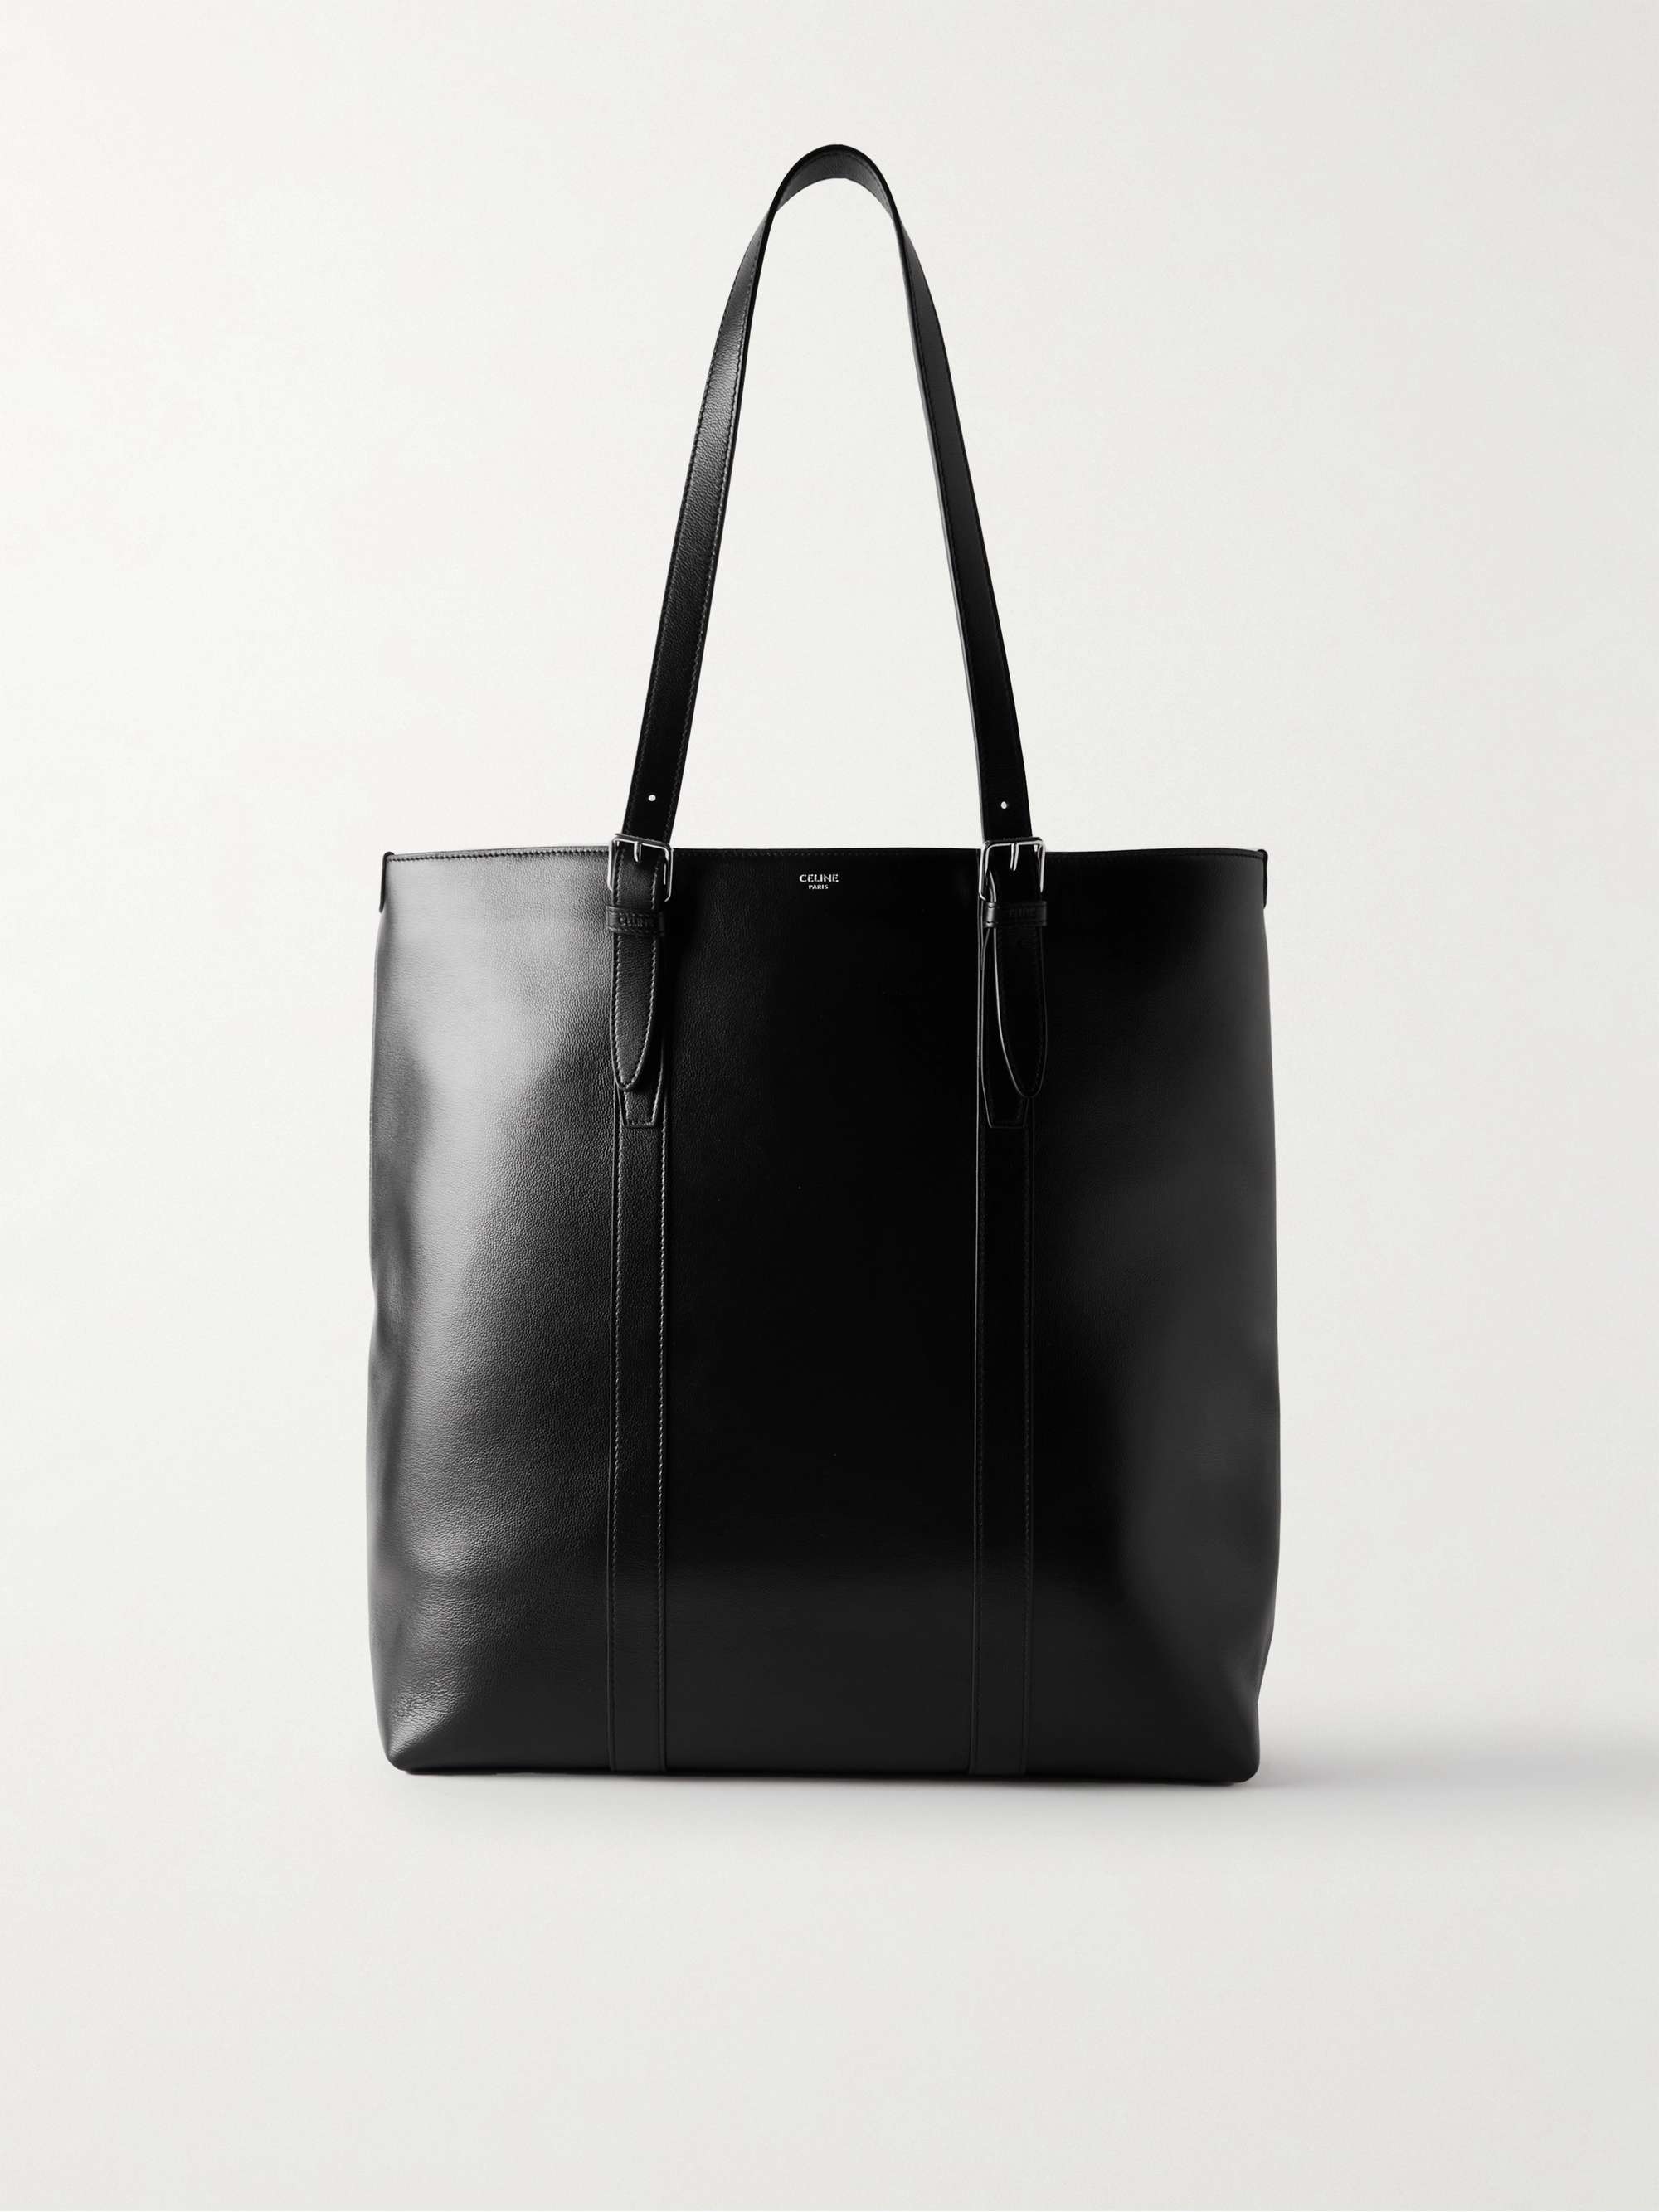 CELINE HOMME Cabas Full-Grain Leather Tote Bag for Men | MR PORTER